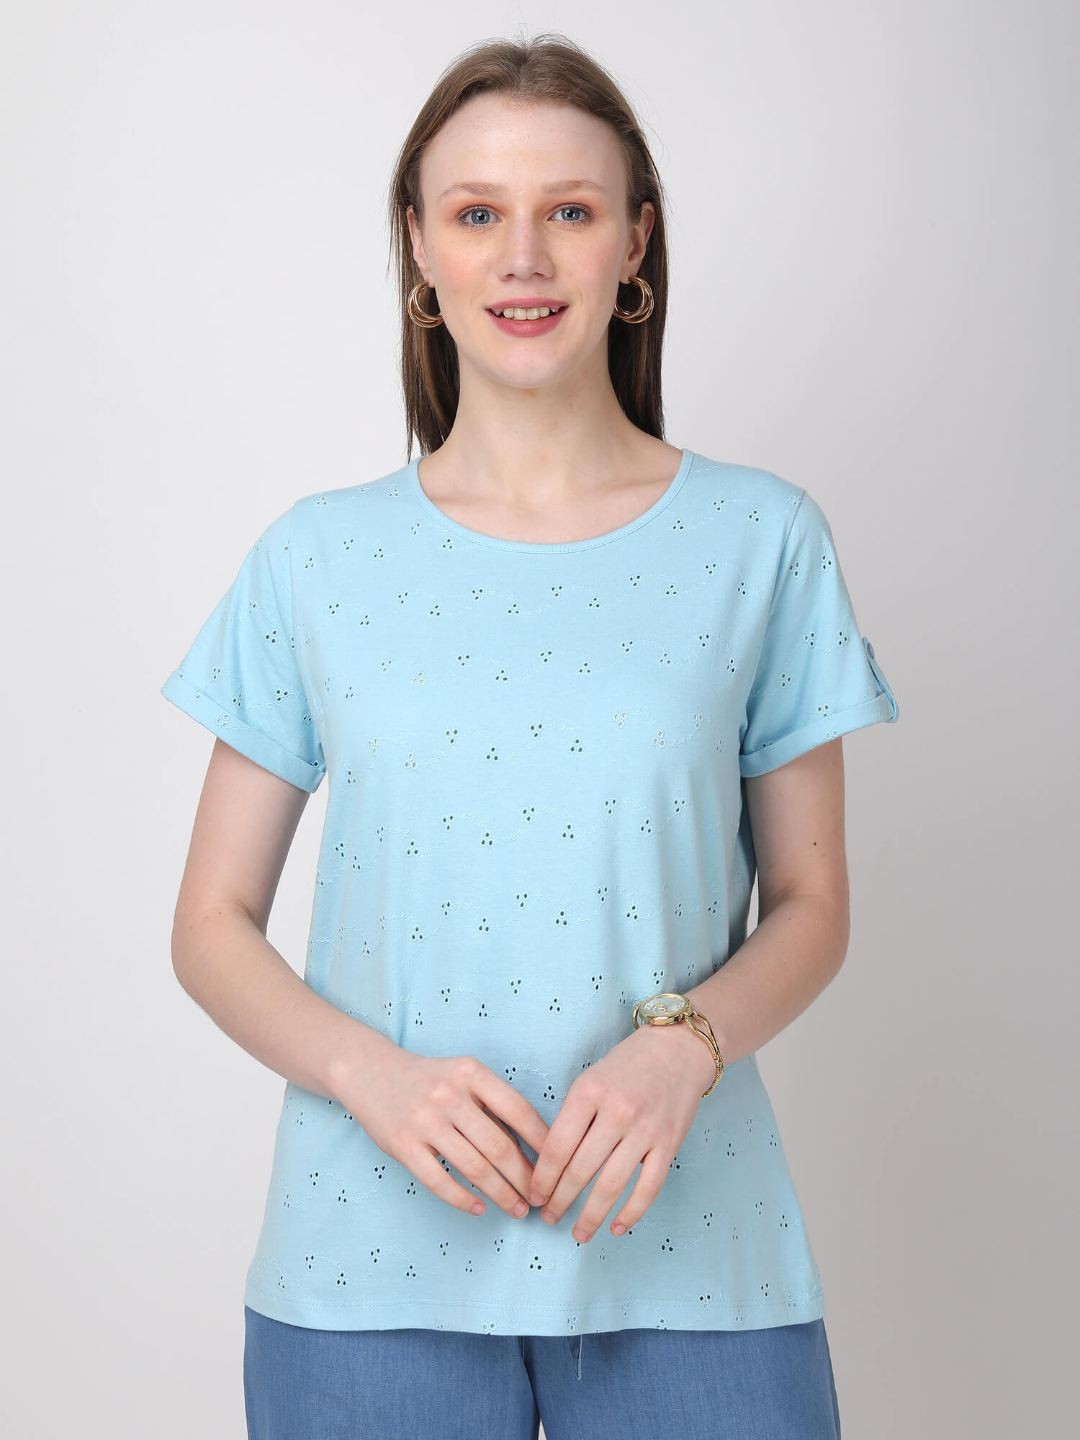 Women Schiffli Tshirt In SkyBlue - Young Fashion